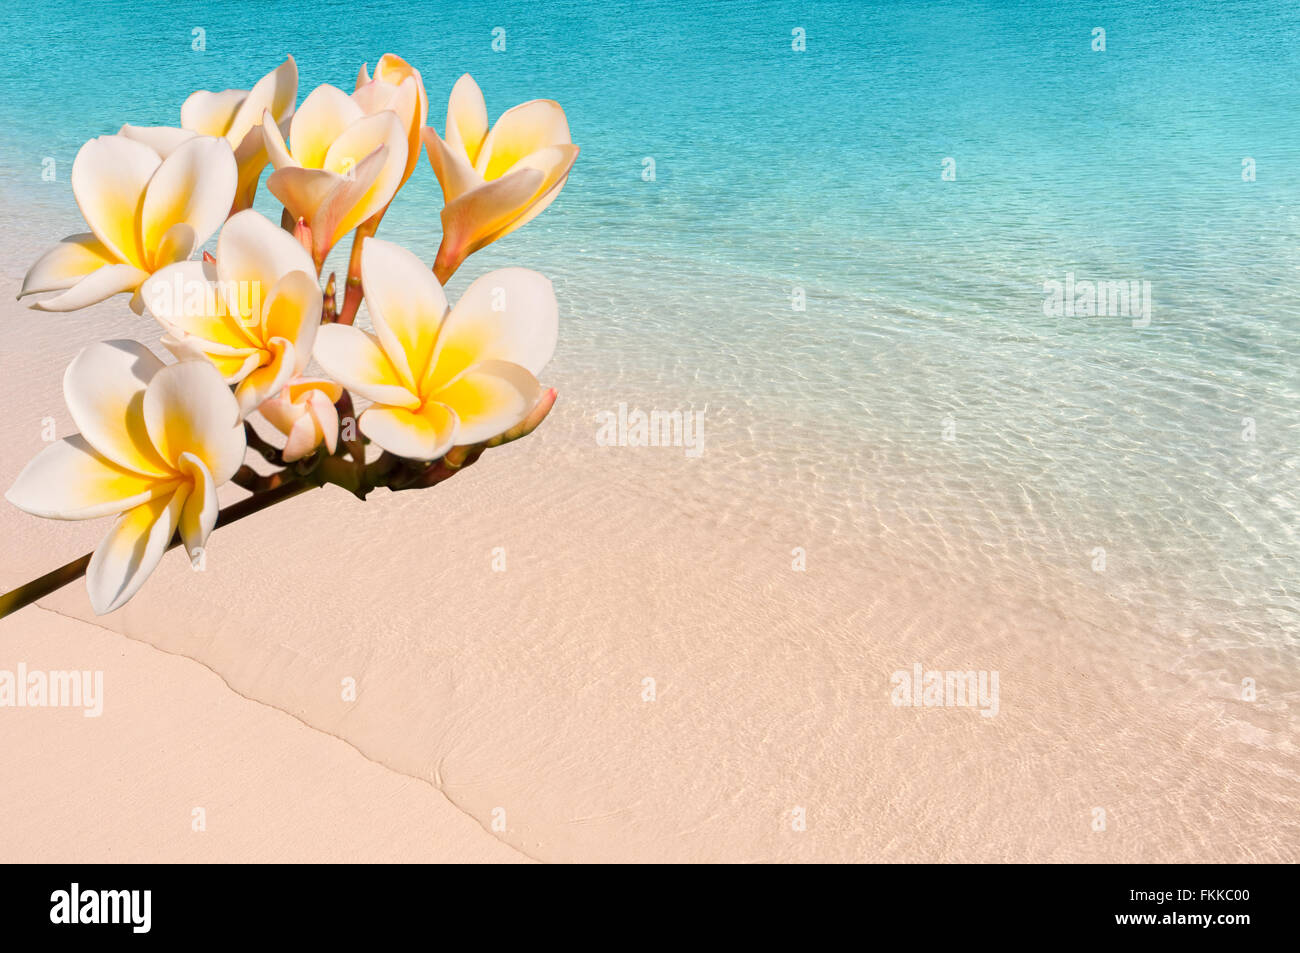 Branch of frangipani flowers (plumeria) close-up, tropical beach background Stock Photo